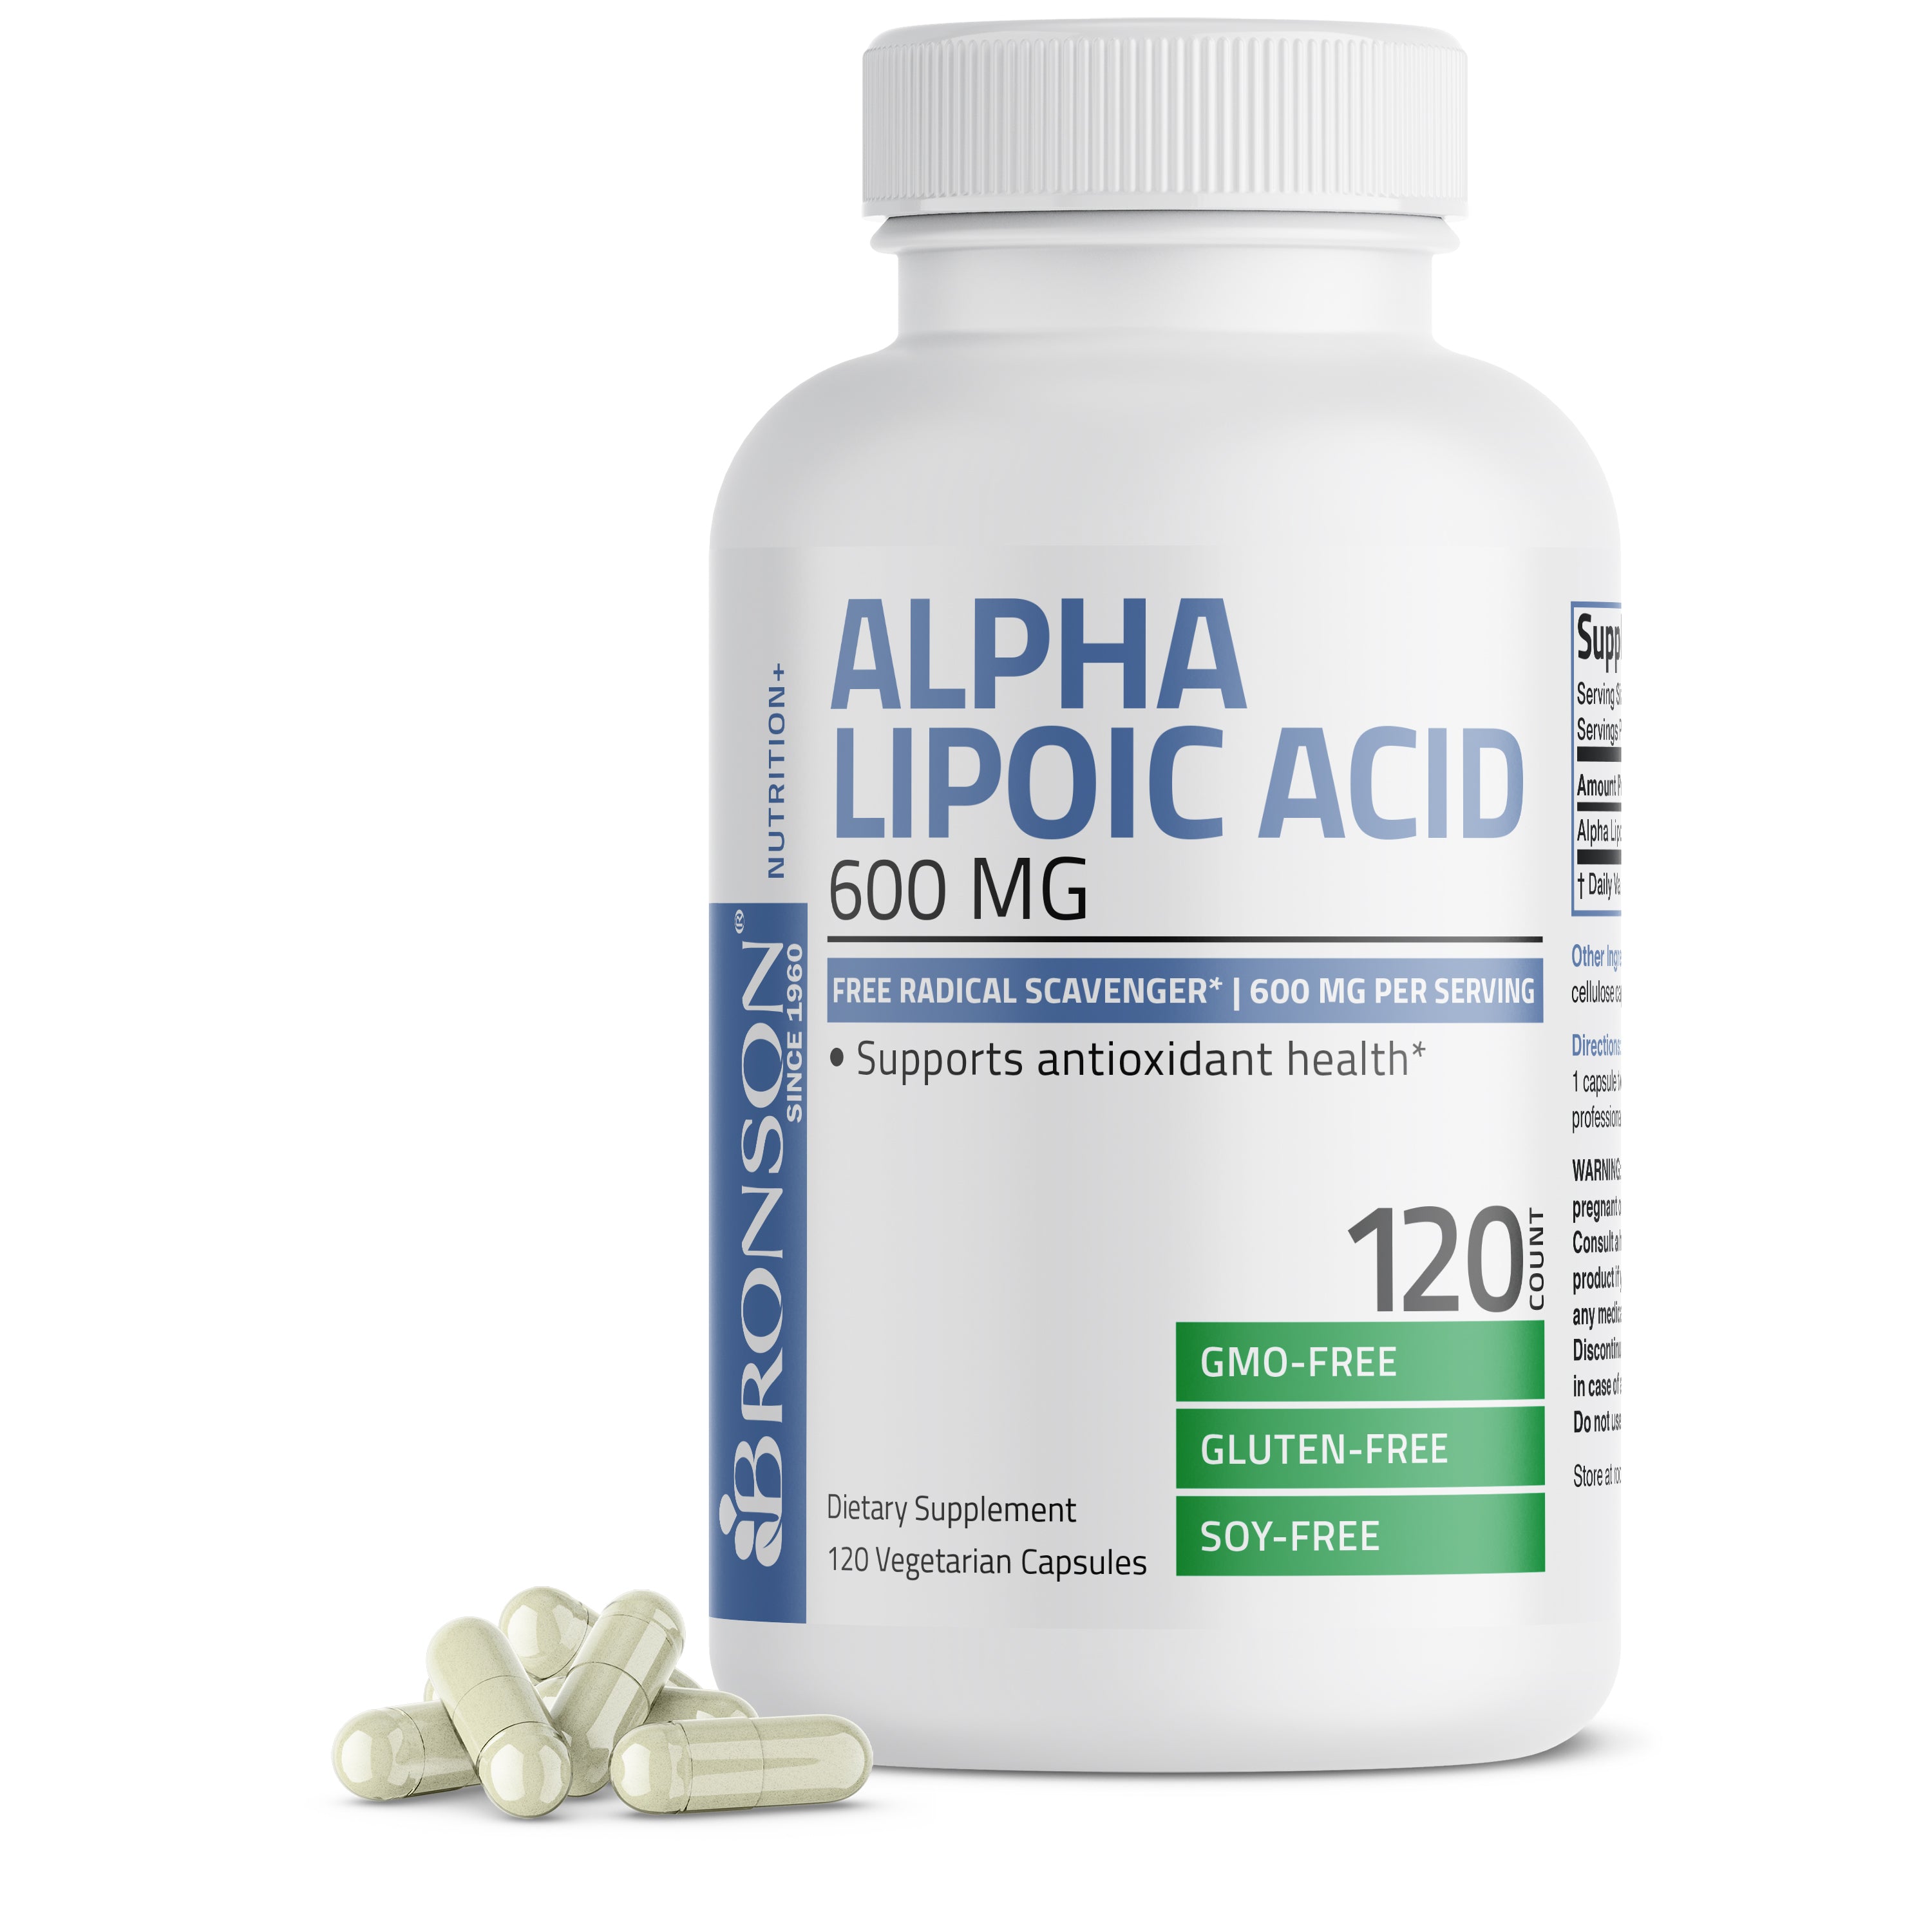 Alpha Lipoic Acid 600 MG view 1 of 7